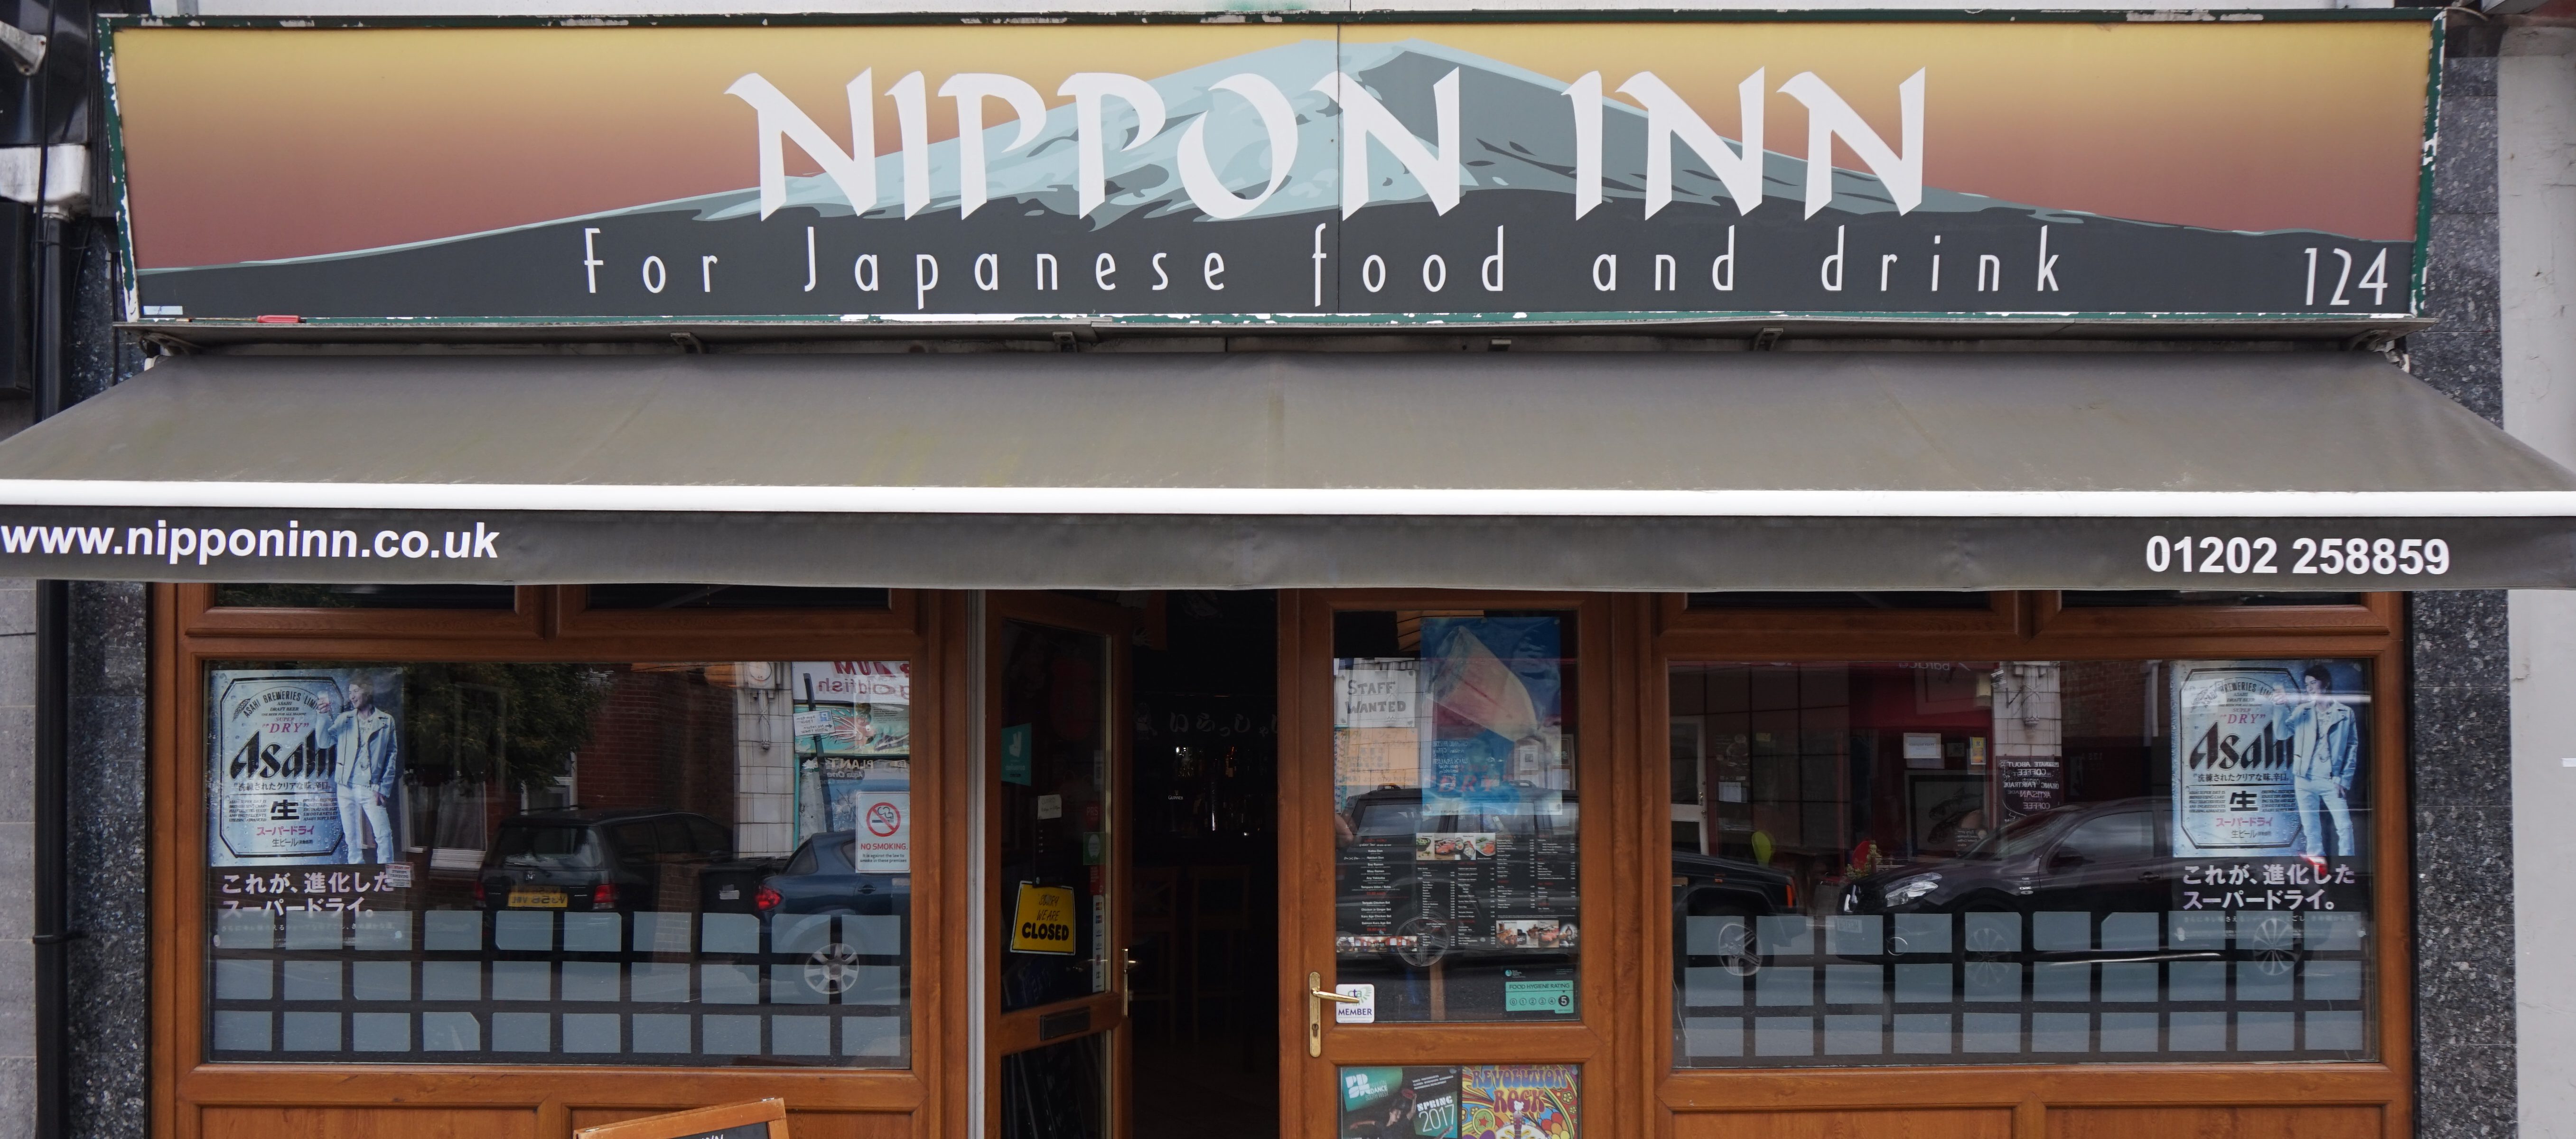 Nippon Inn